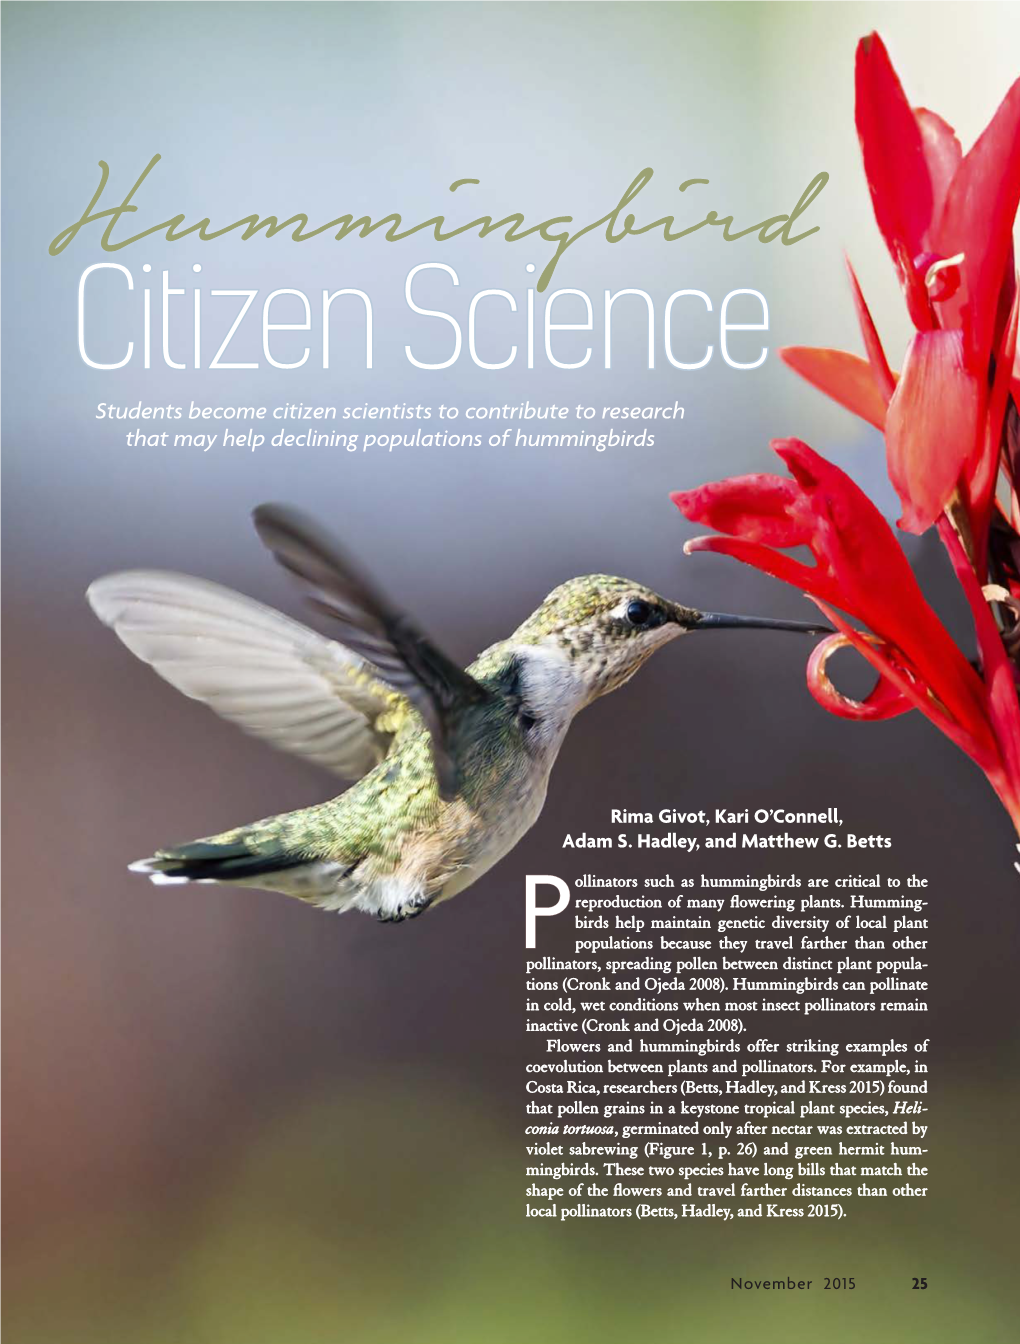 Hummingbird Citizen Science